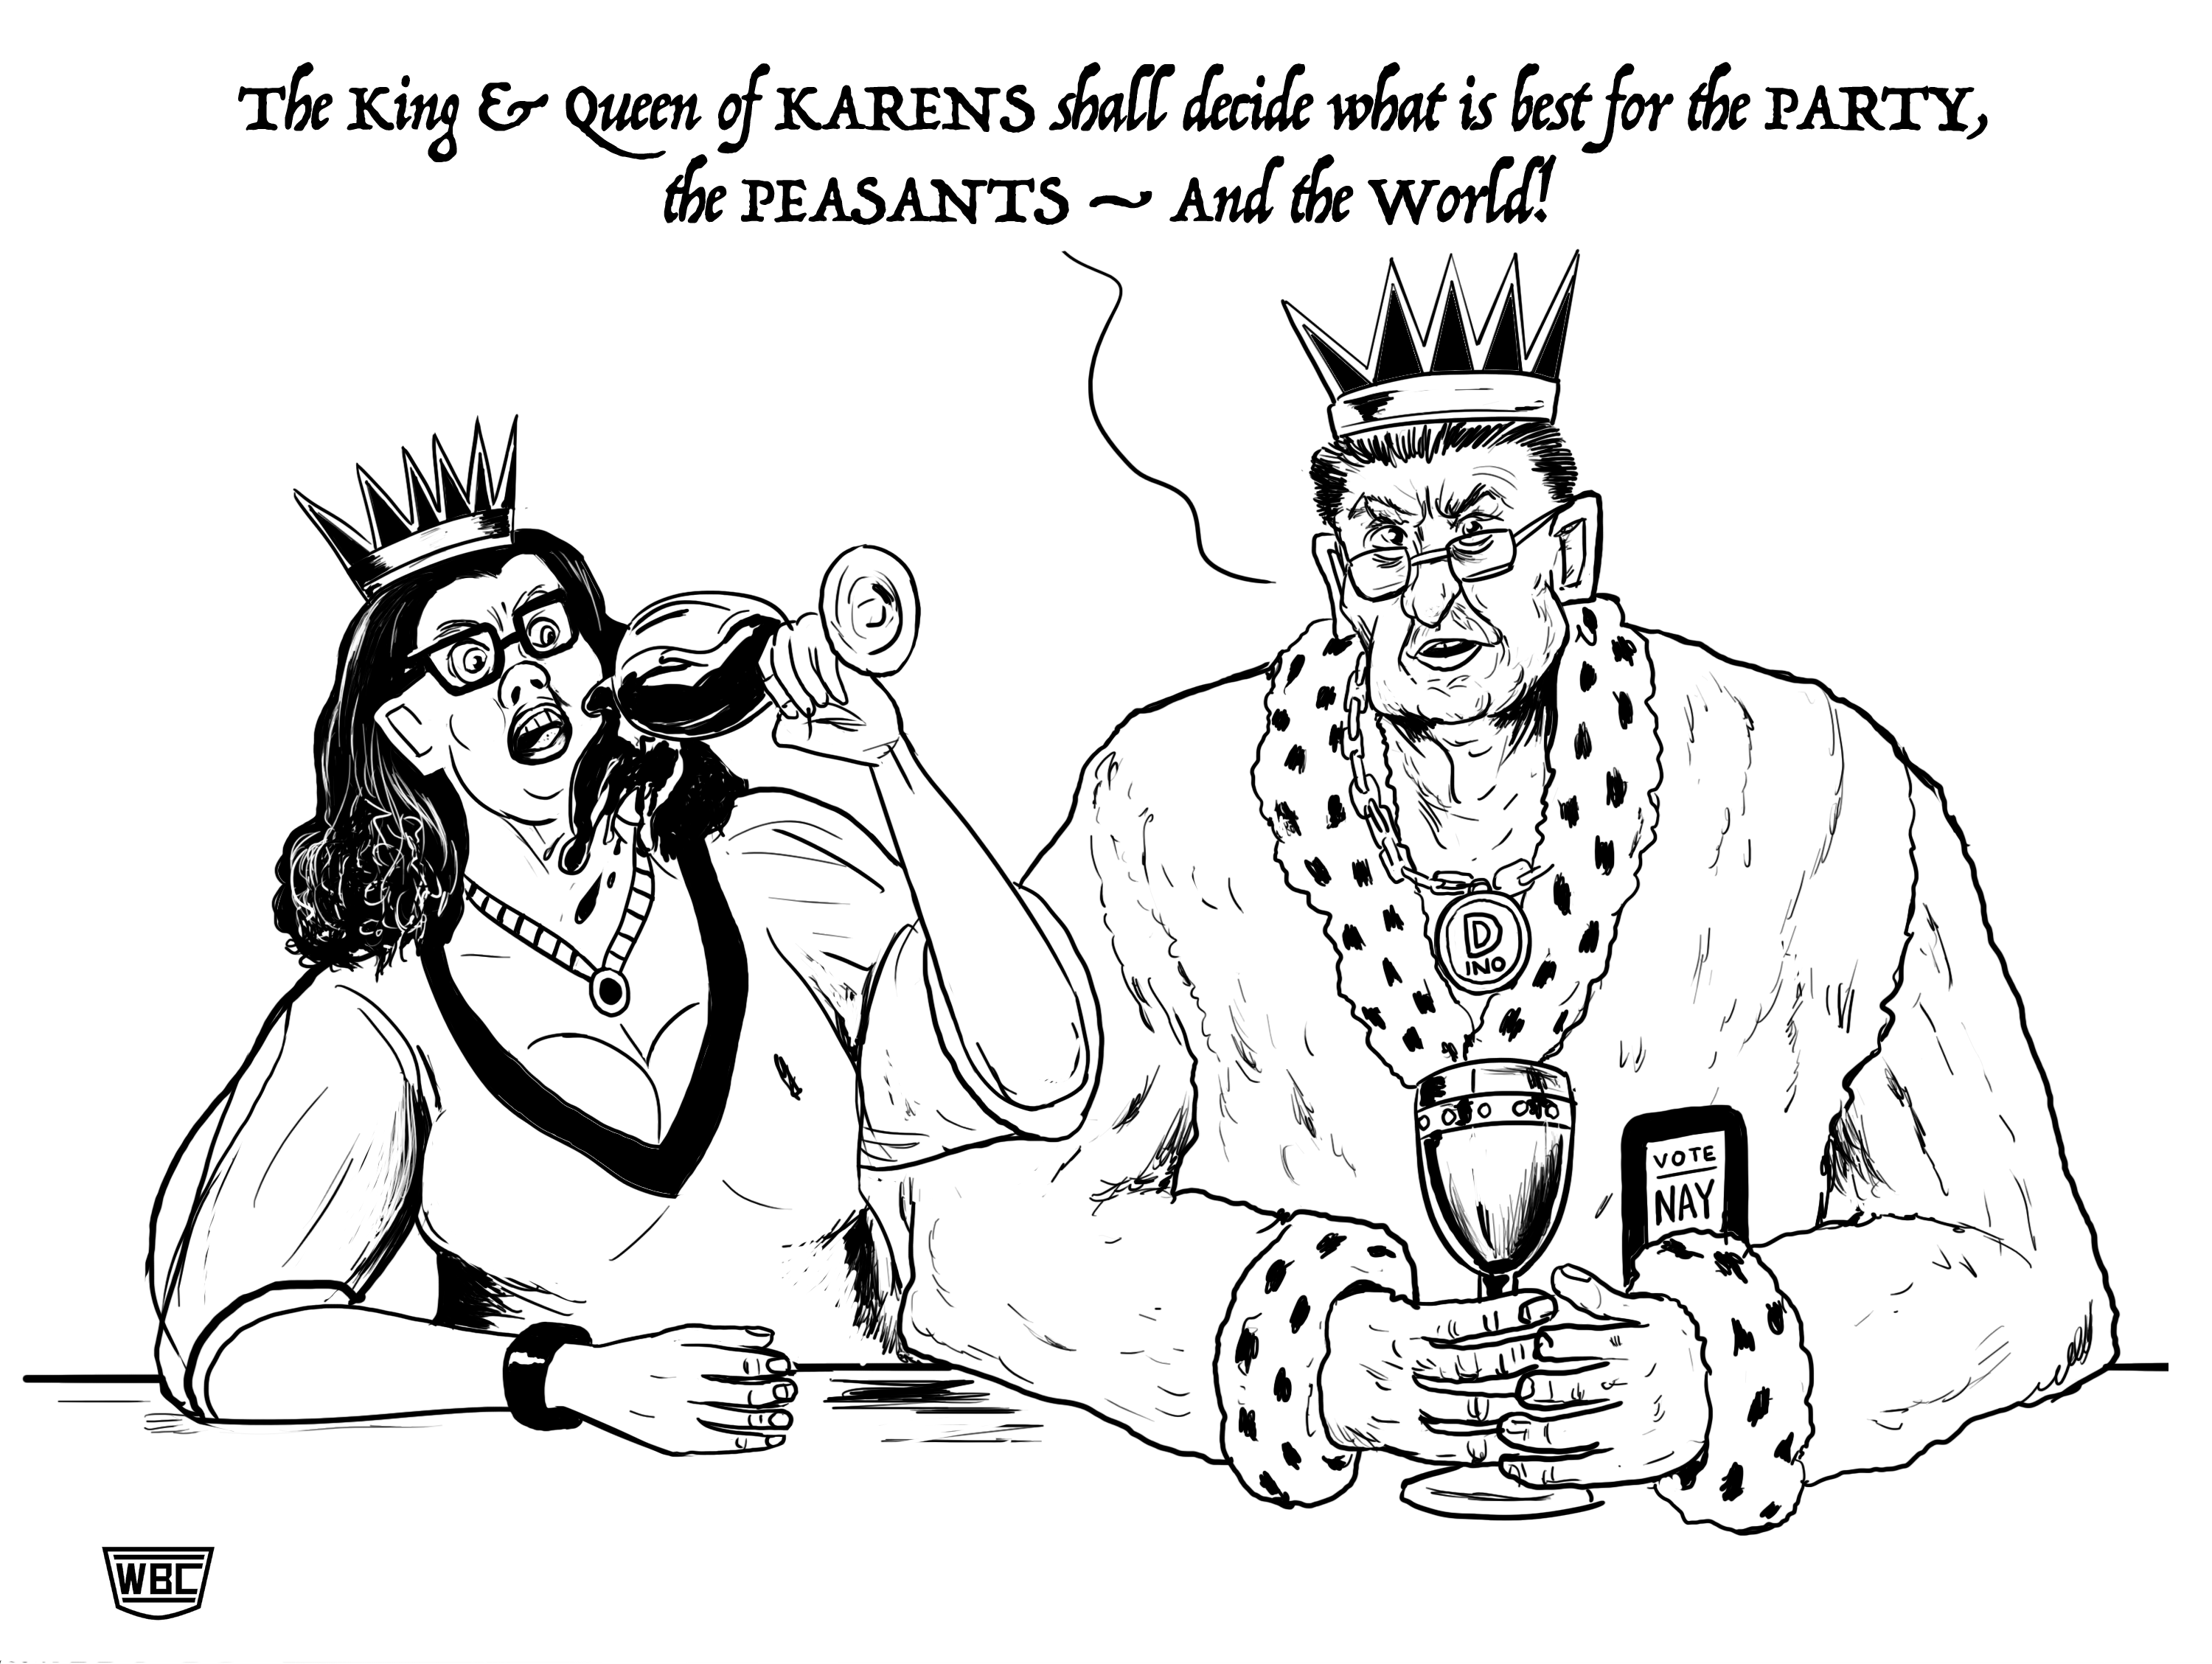 The Royal Karens